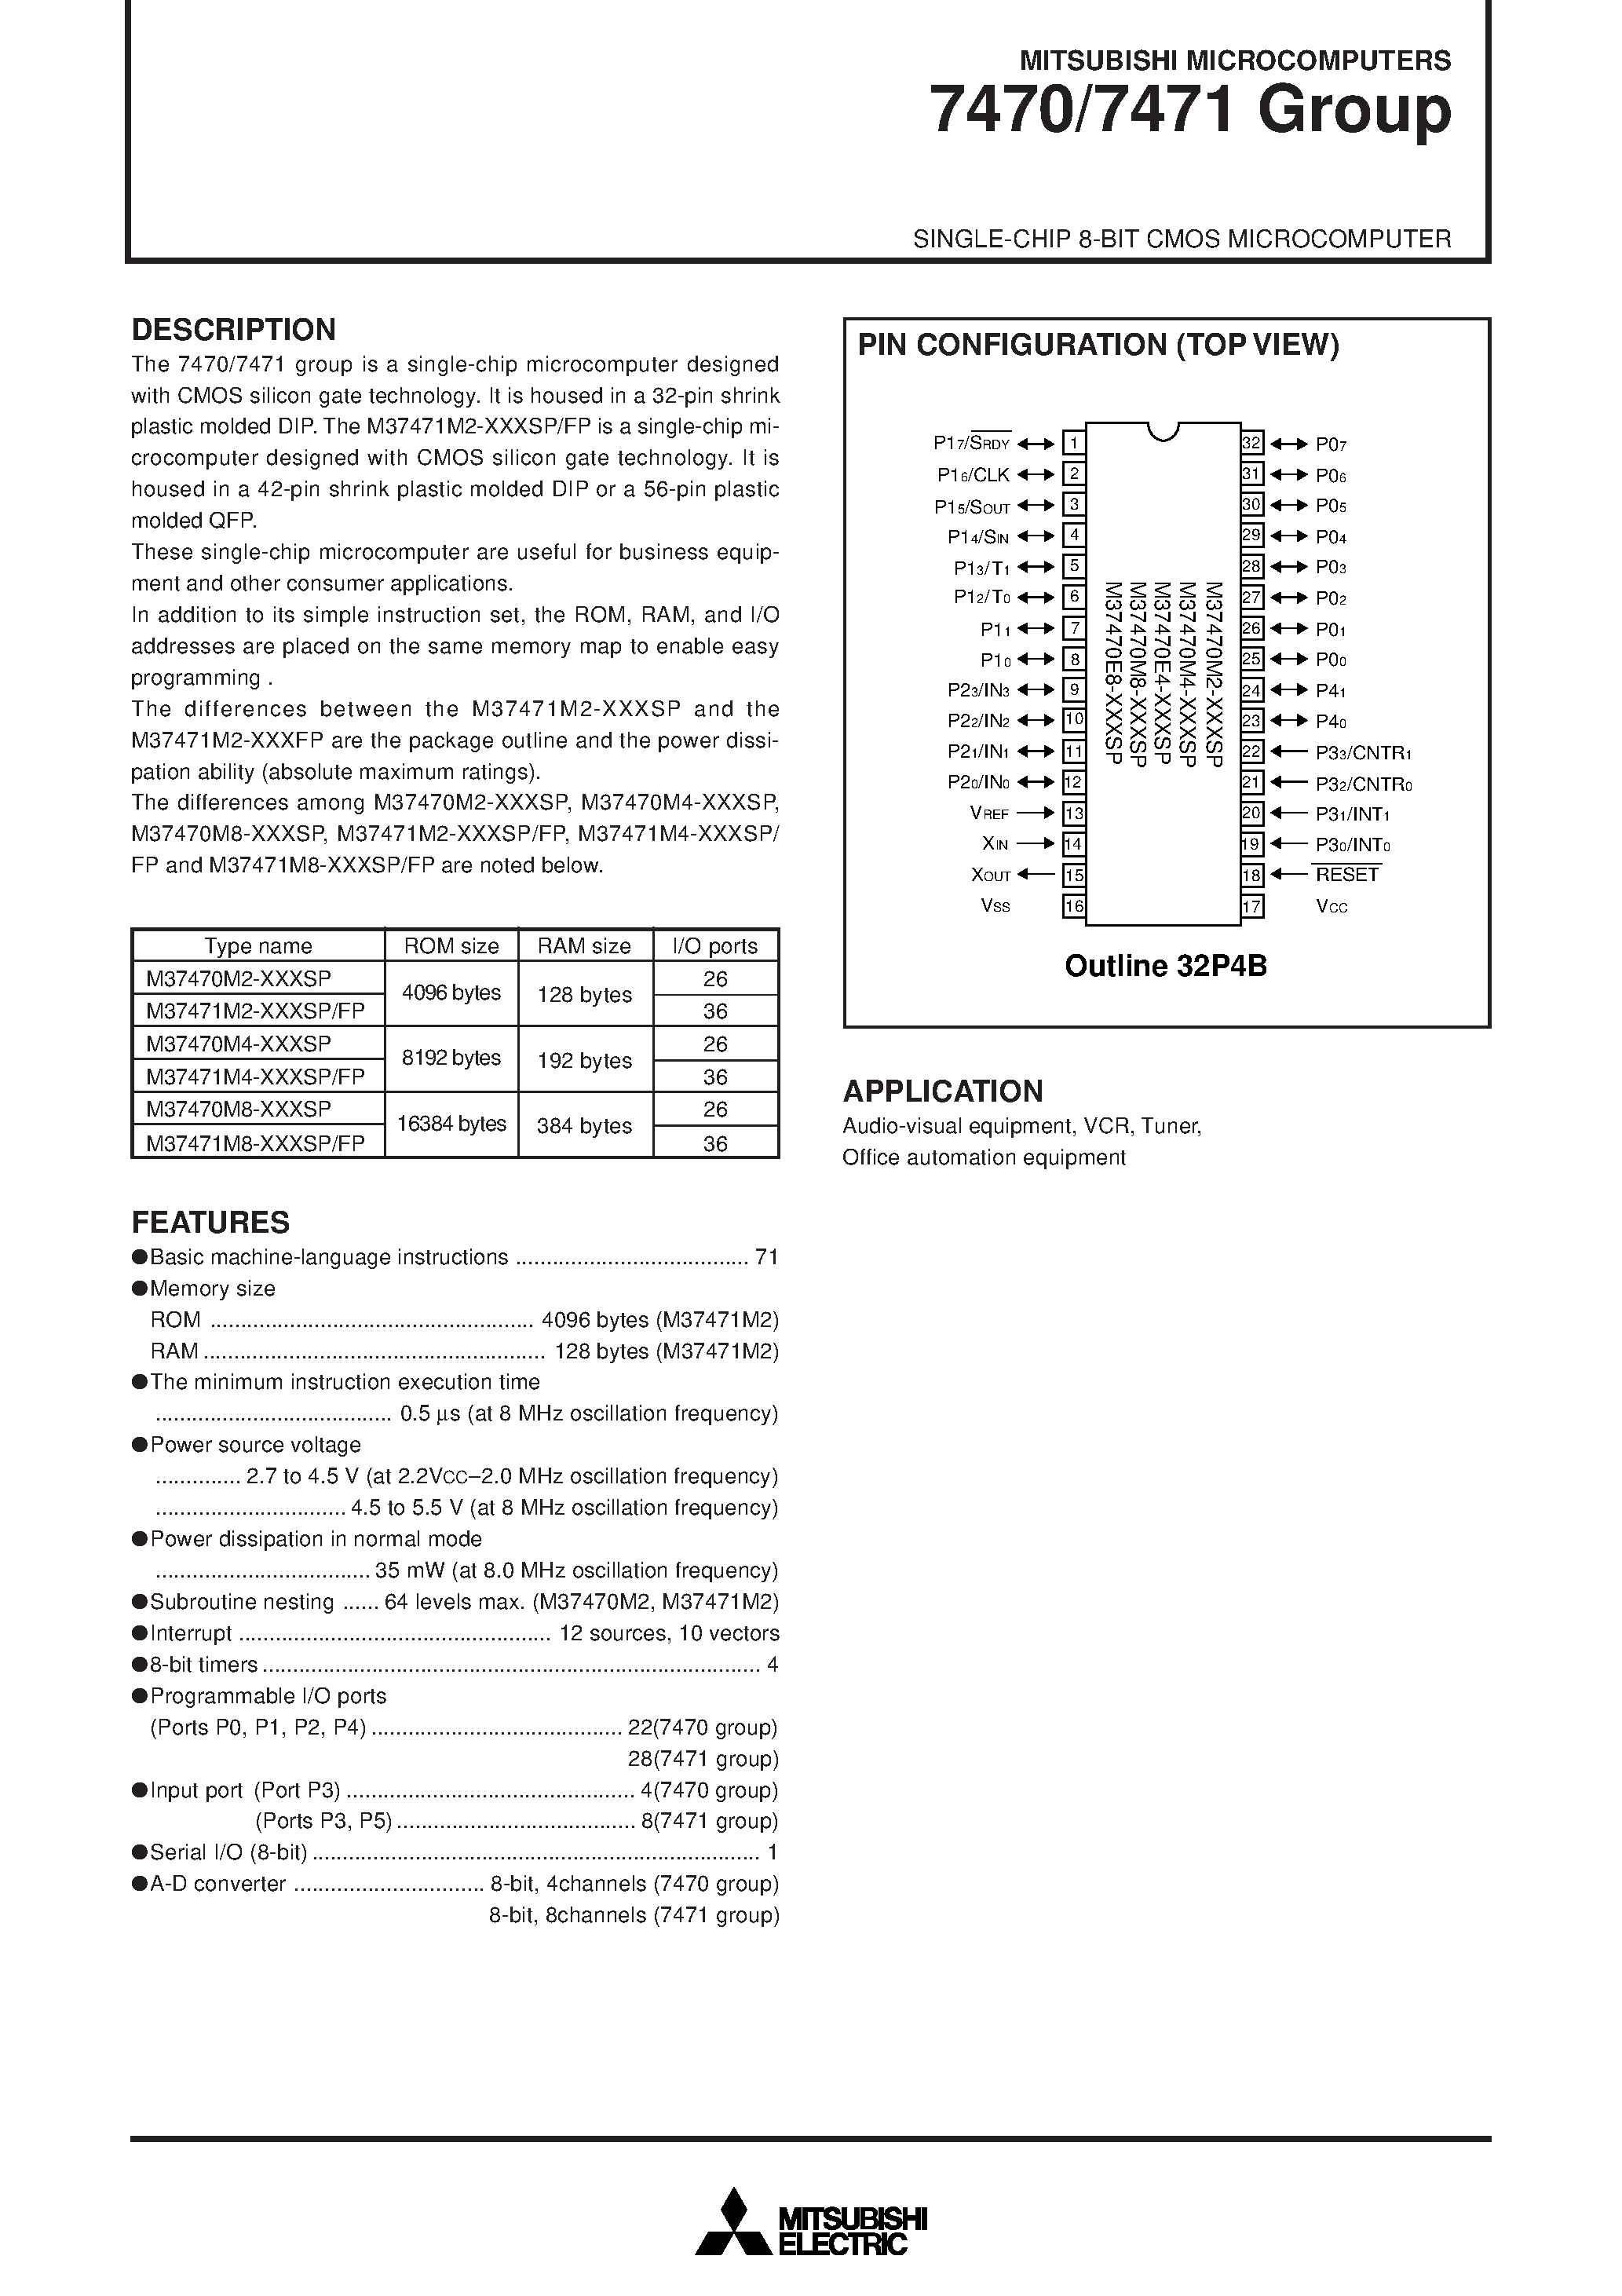 Даташит M37470M4-743SP - SINGLE-CHIP 8-BIT CMOS MICROCOMPUTER страница 1